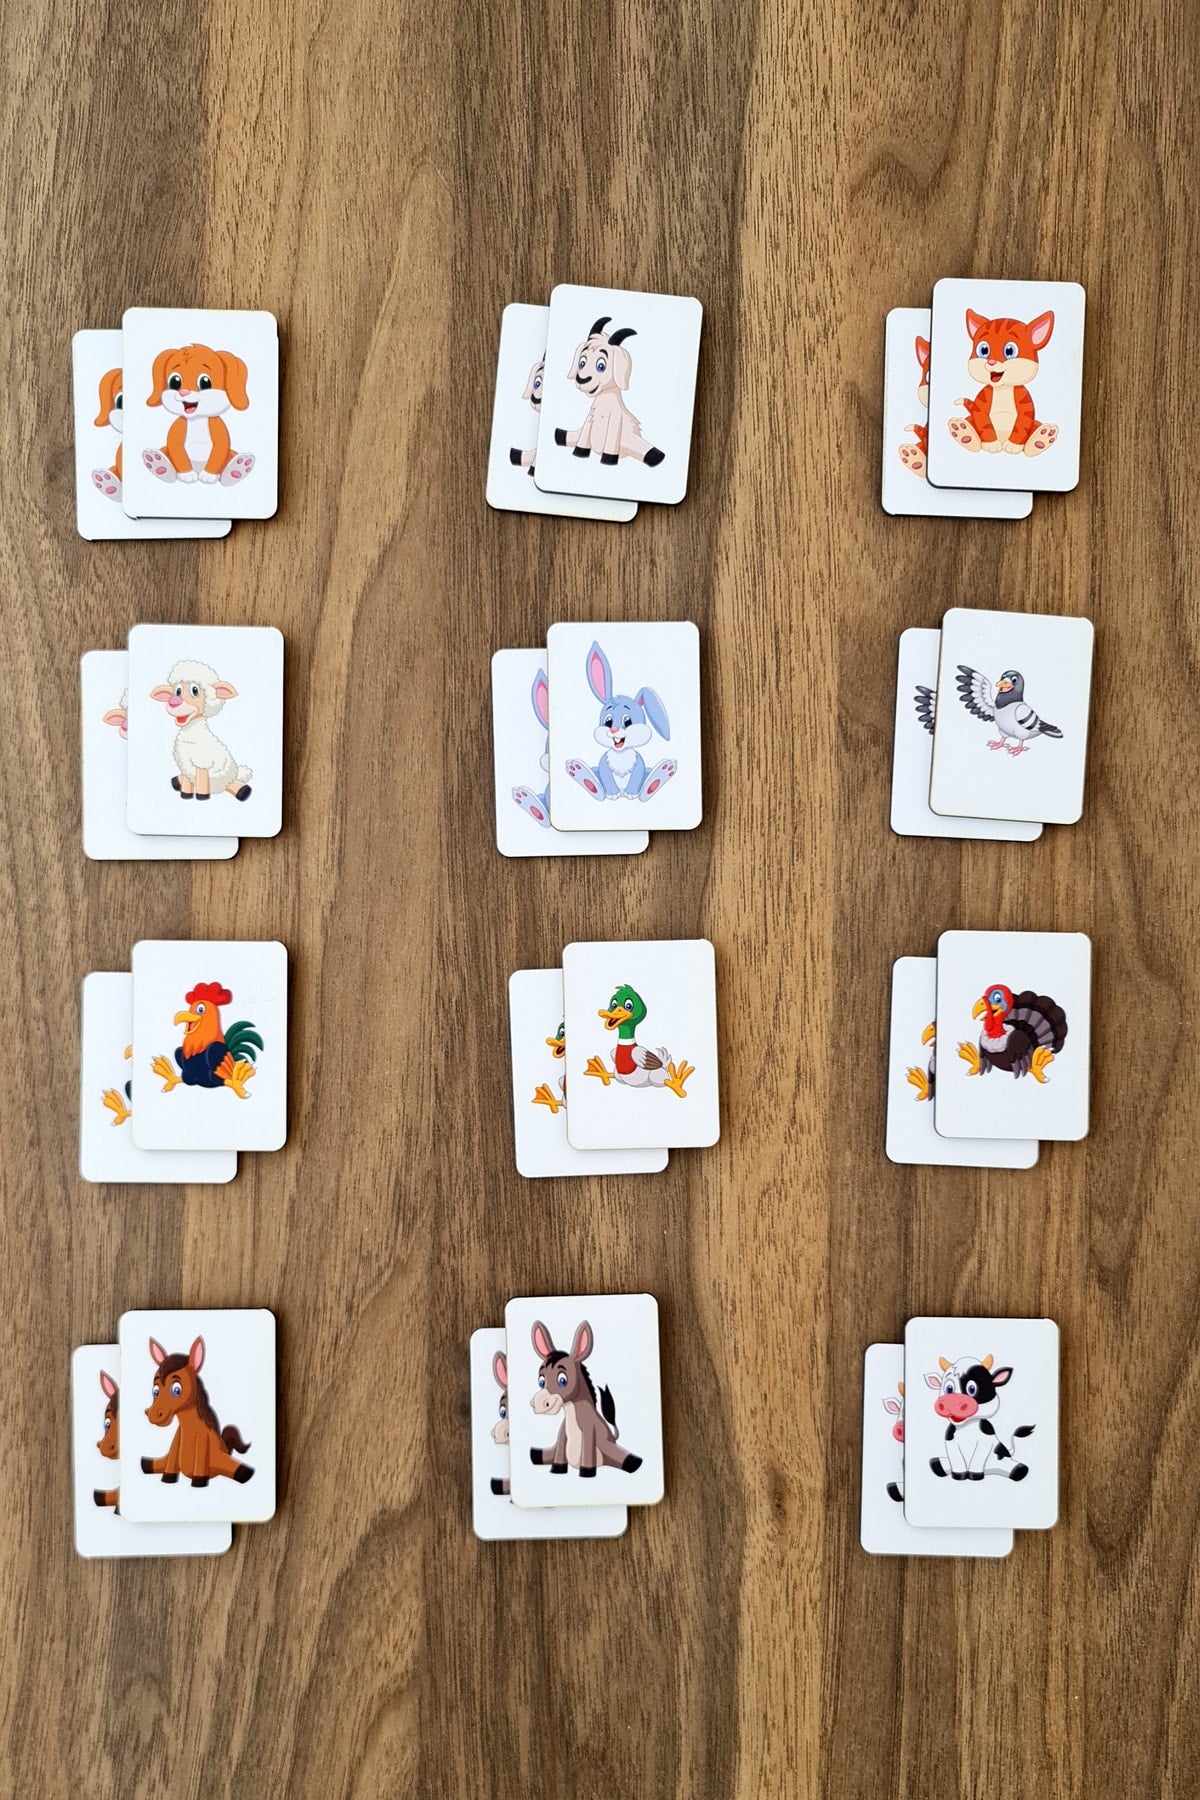 Wooden Cute Farm Animals Brain Teaser Cards Matching Game Preschool Educational Material